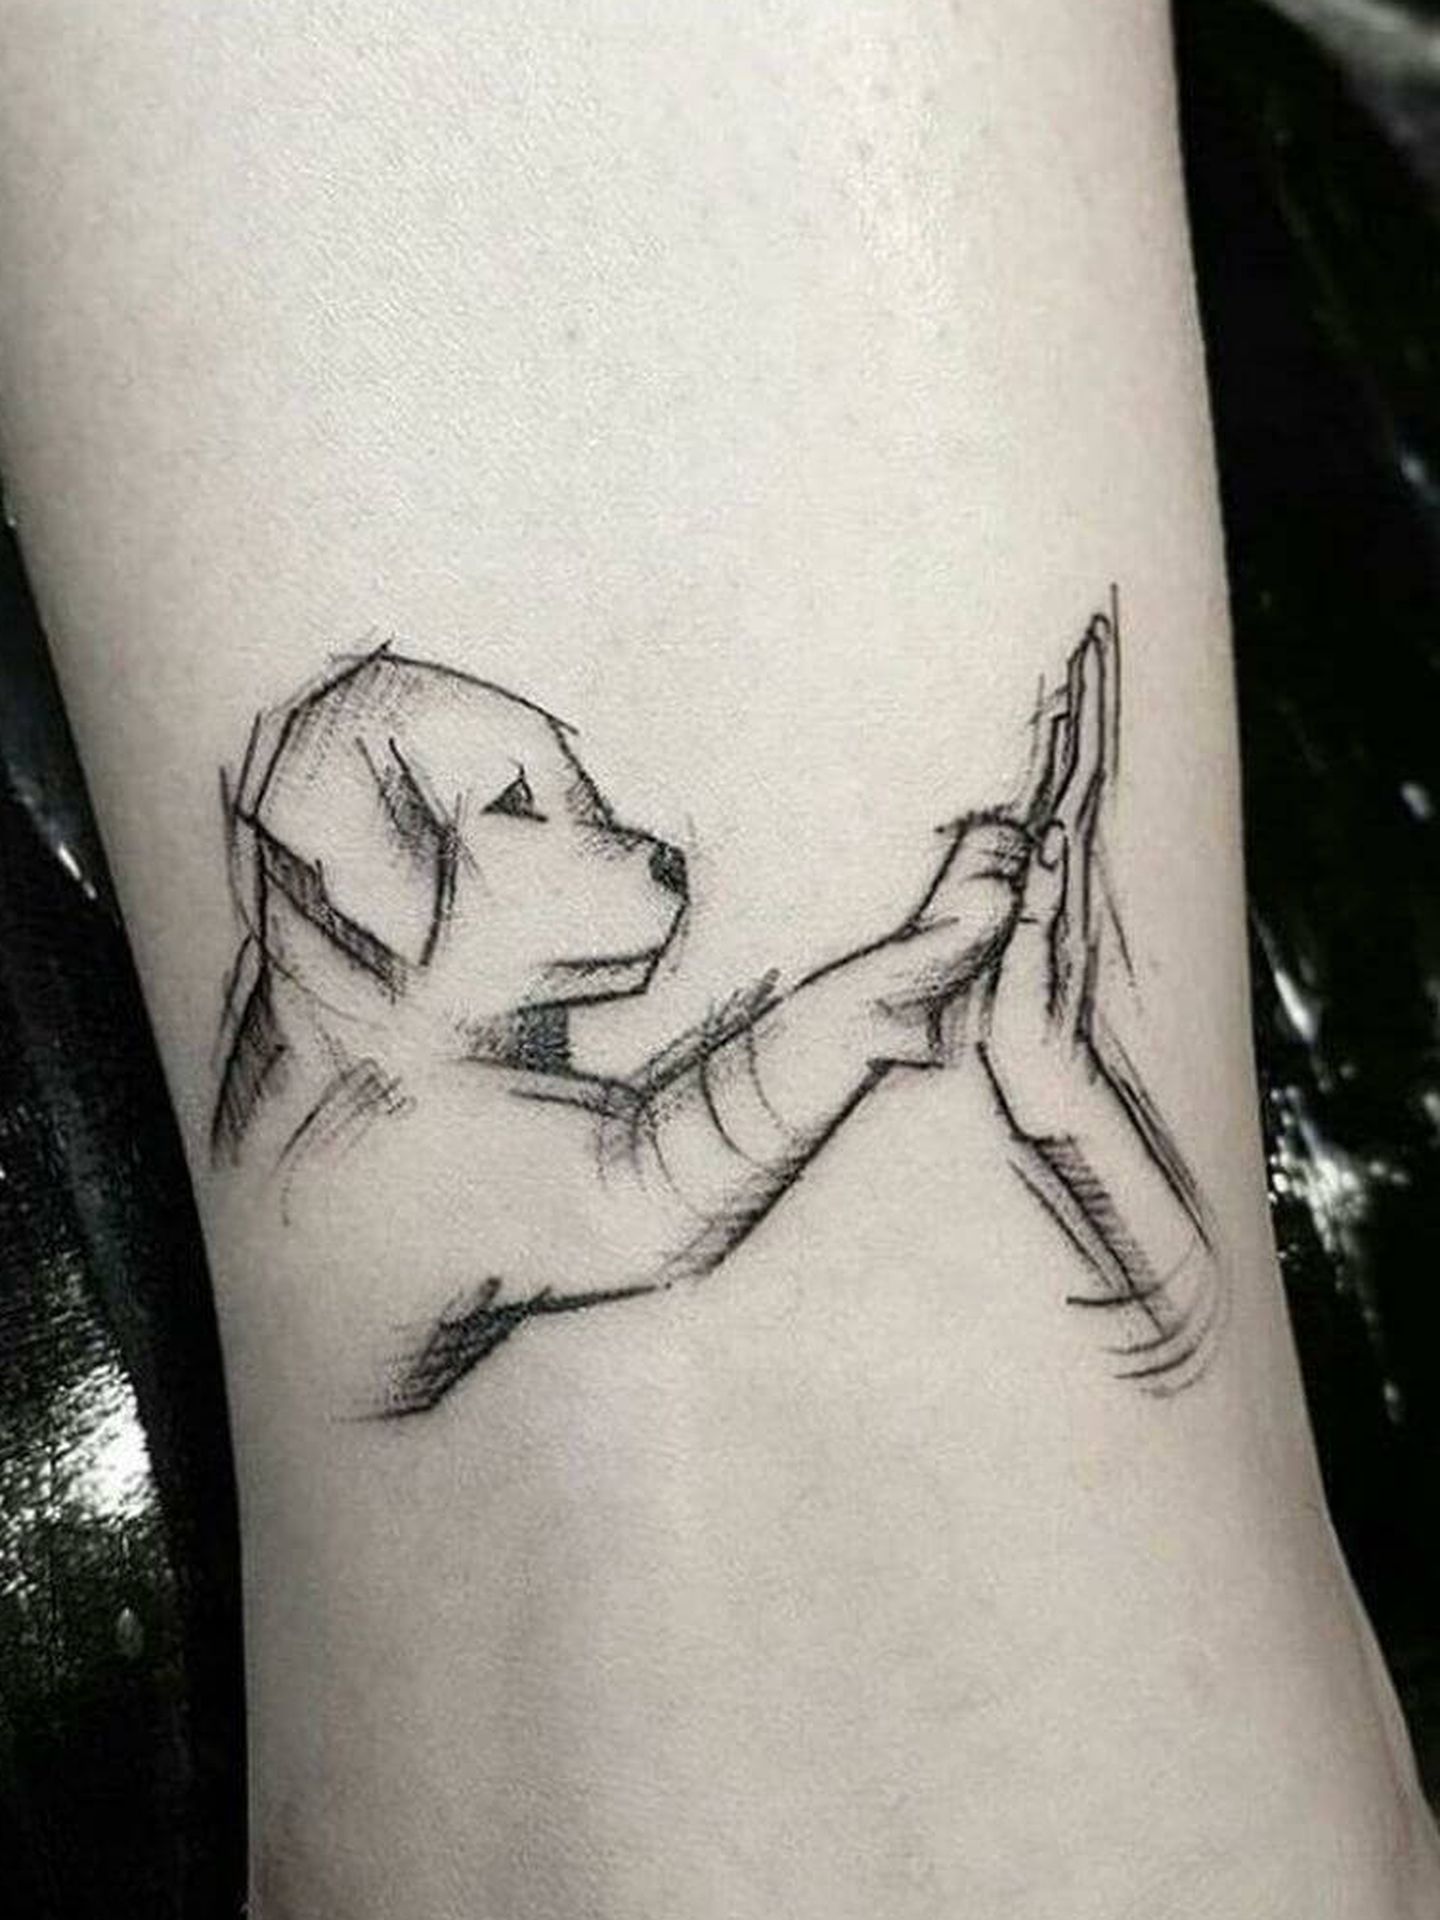 Tatuaje de una mascota.